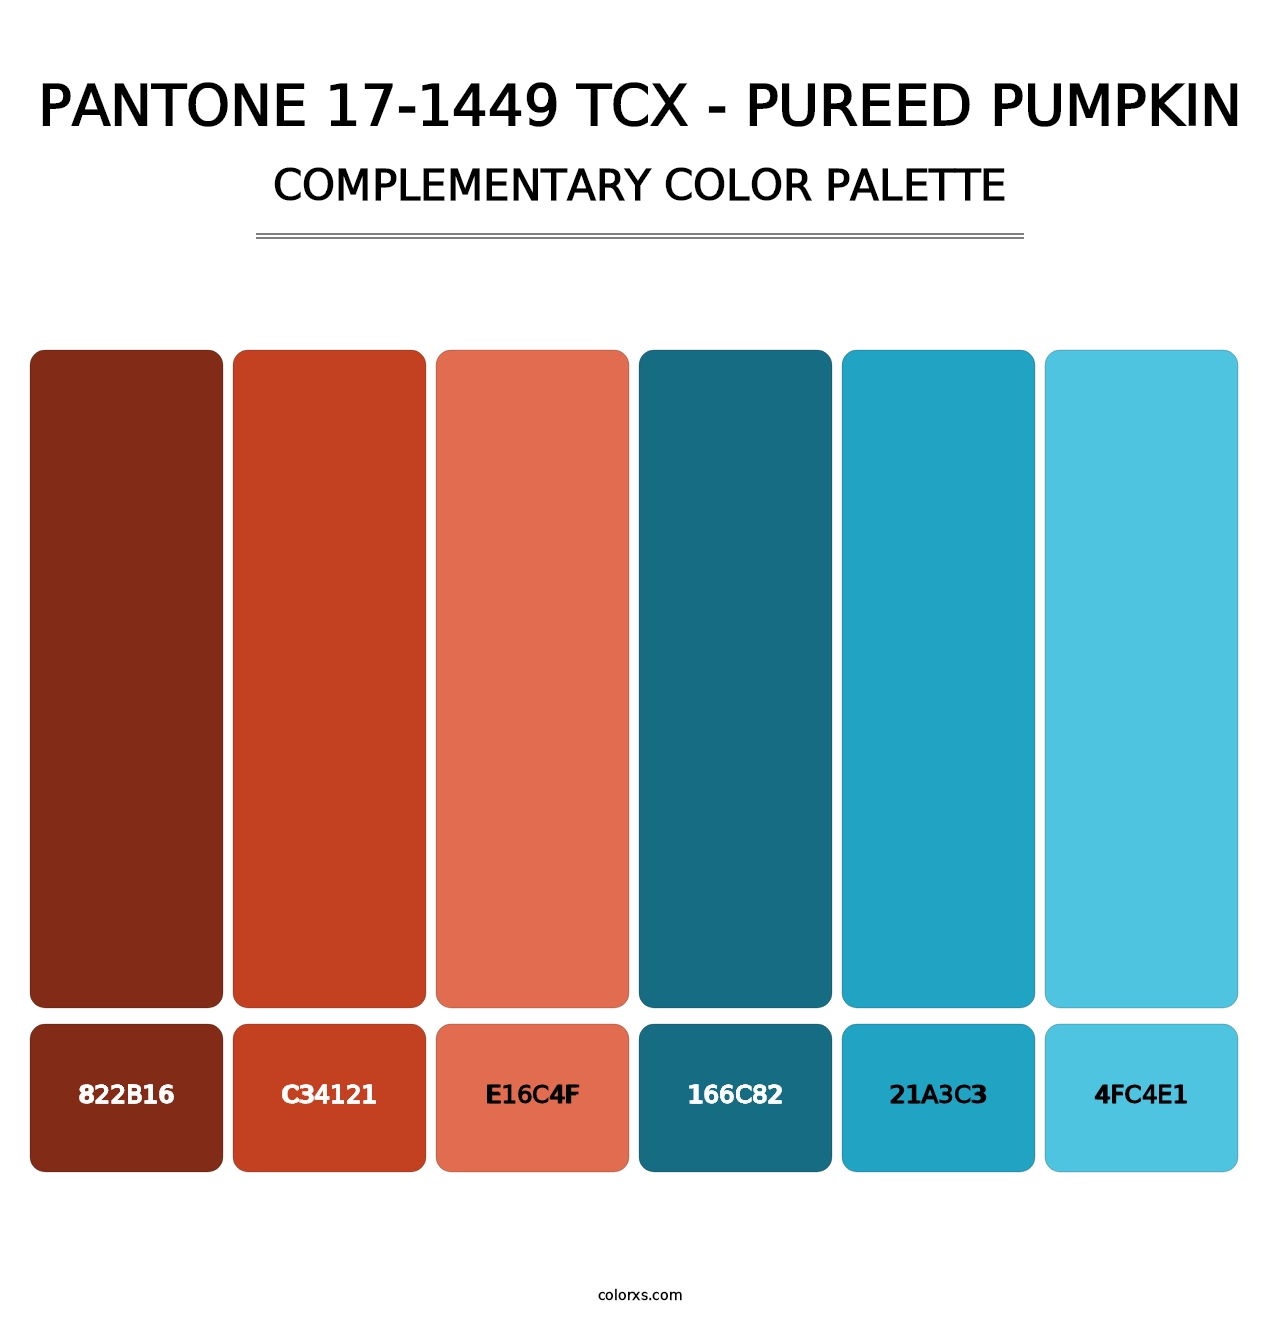 PANTONE 17-1449 TCX - Pureed Pumpkin - Complementary Color Palette